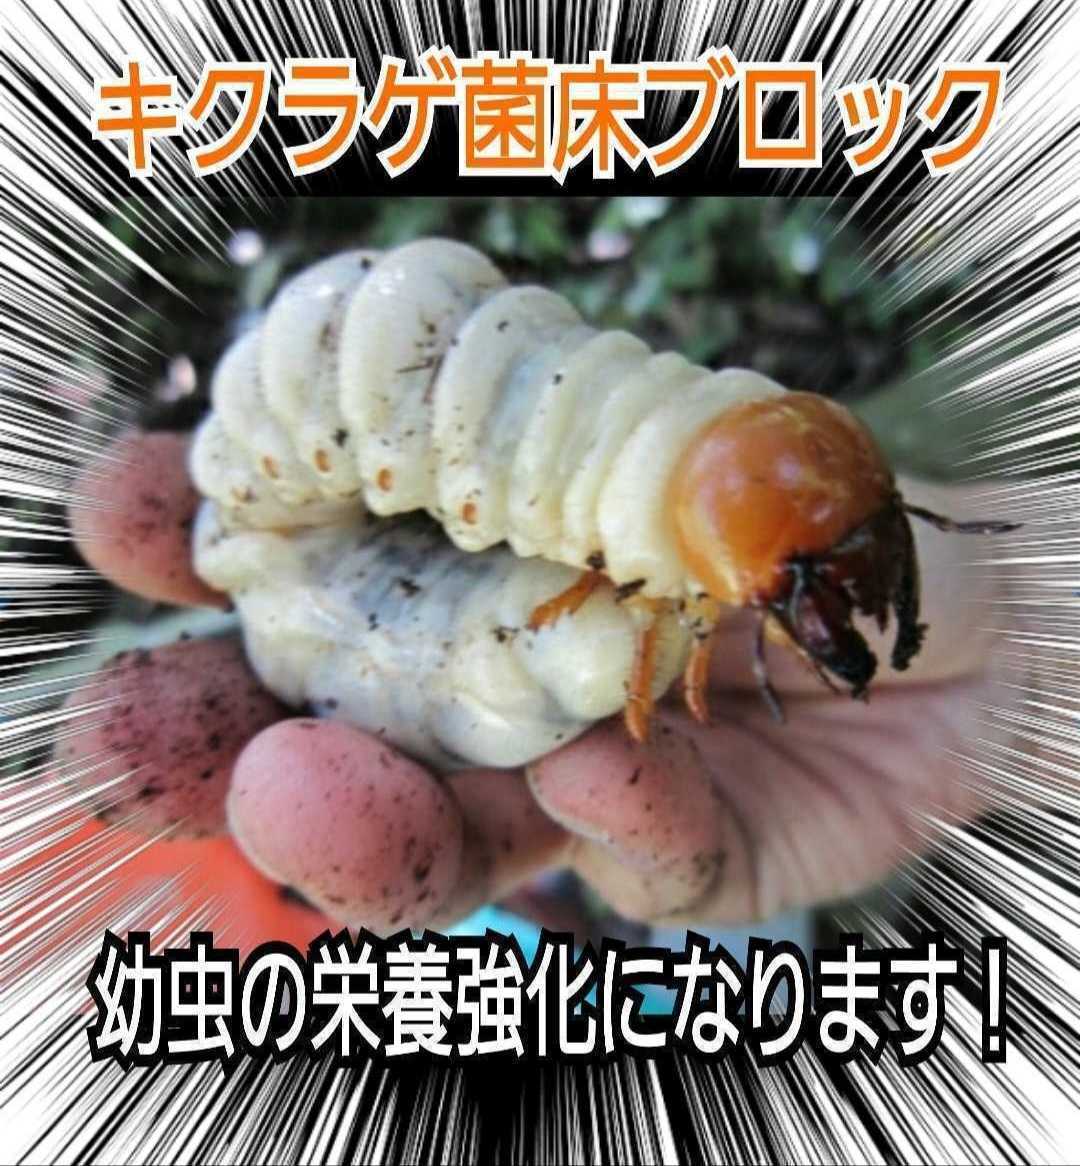  stag beetle larva. production egg floor .!ki jellyfish . floor block * Kabuto larva. nutrition strengthen .! mat . embed only .mo Limo li meal .. sawtooth oak, 100% feedstocks 